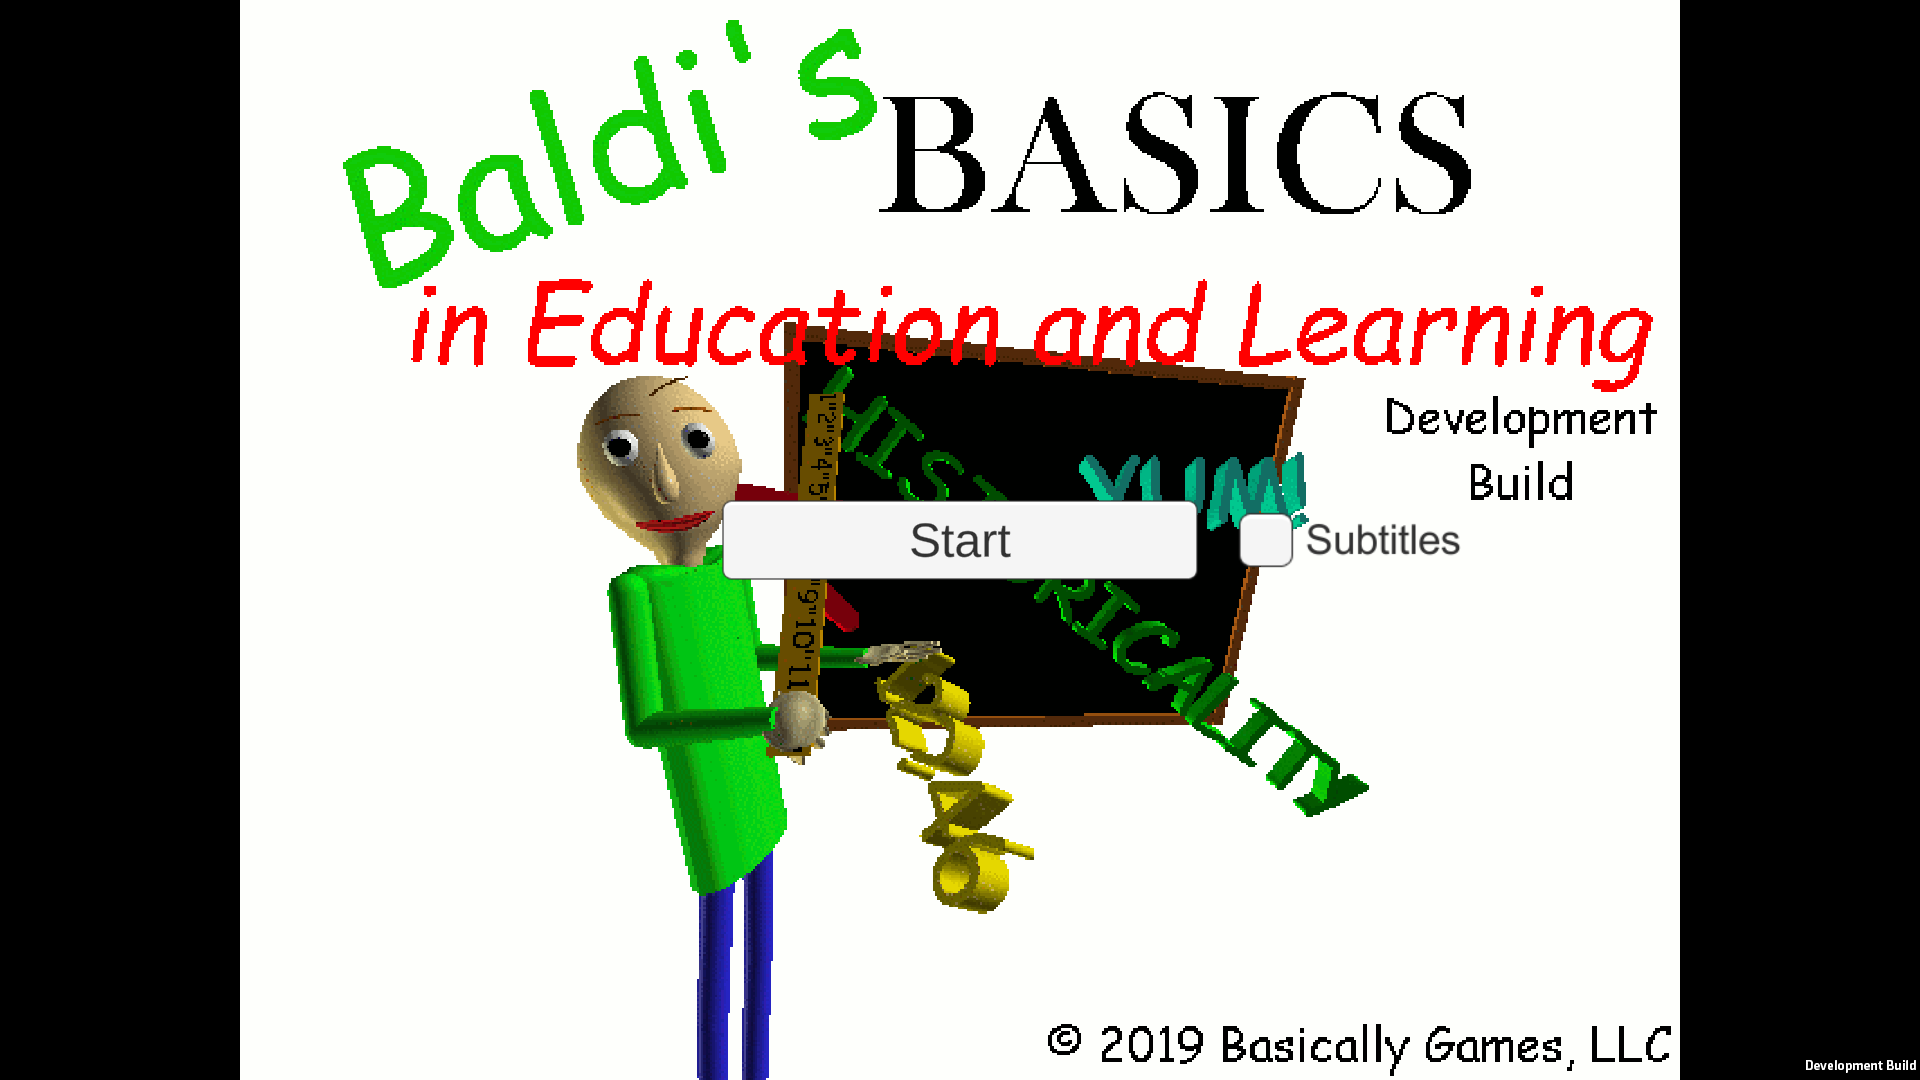 Basically Games - Developer of Baldi's Basics